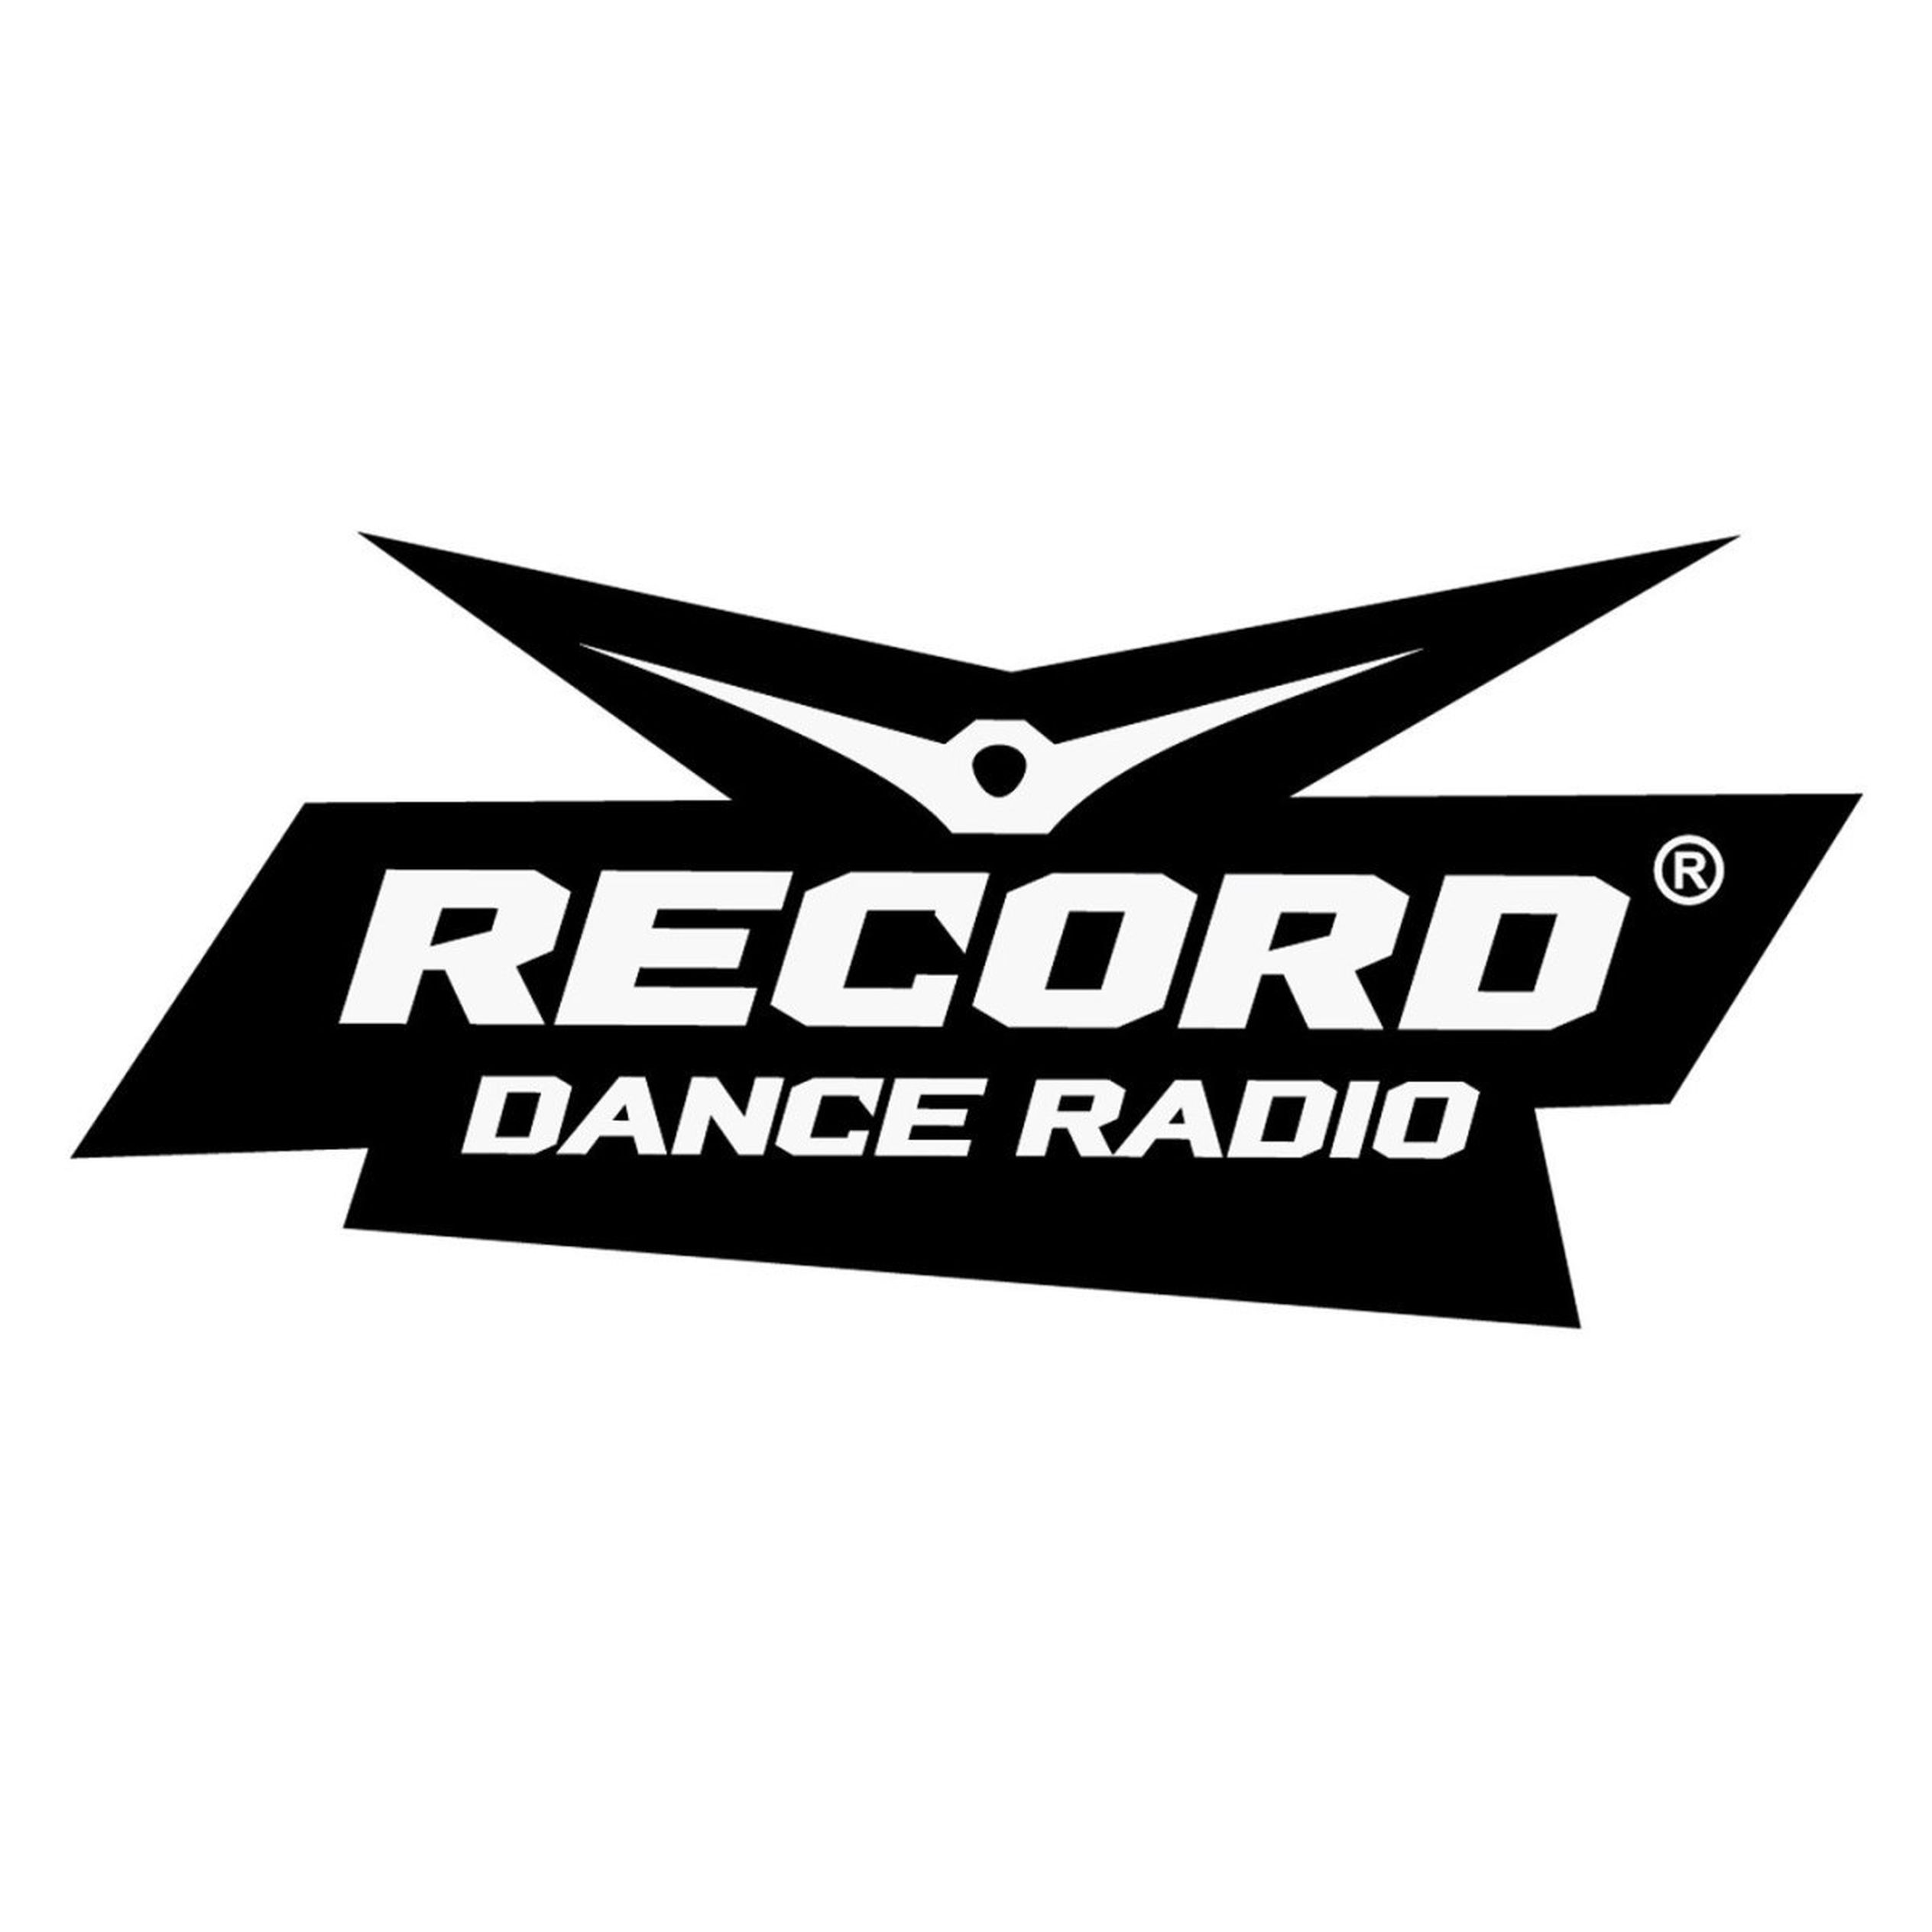 Слушать радио рекорд. Радио рекорд. Логотип радио record. Record Dance Radio. Рекордс радио рекорд.